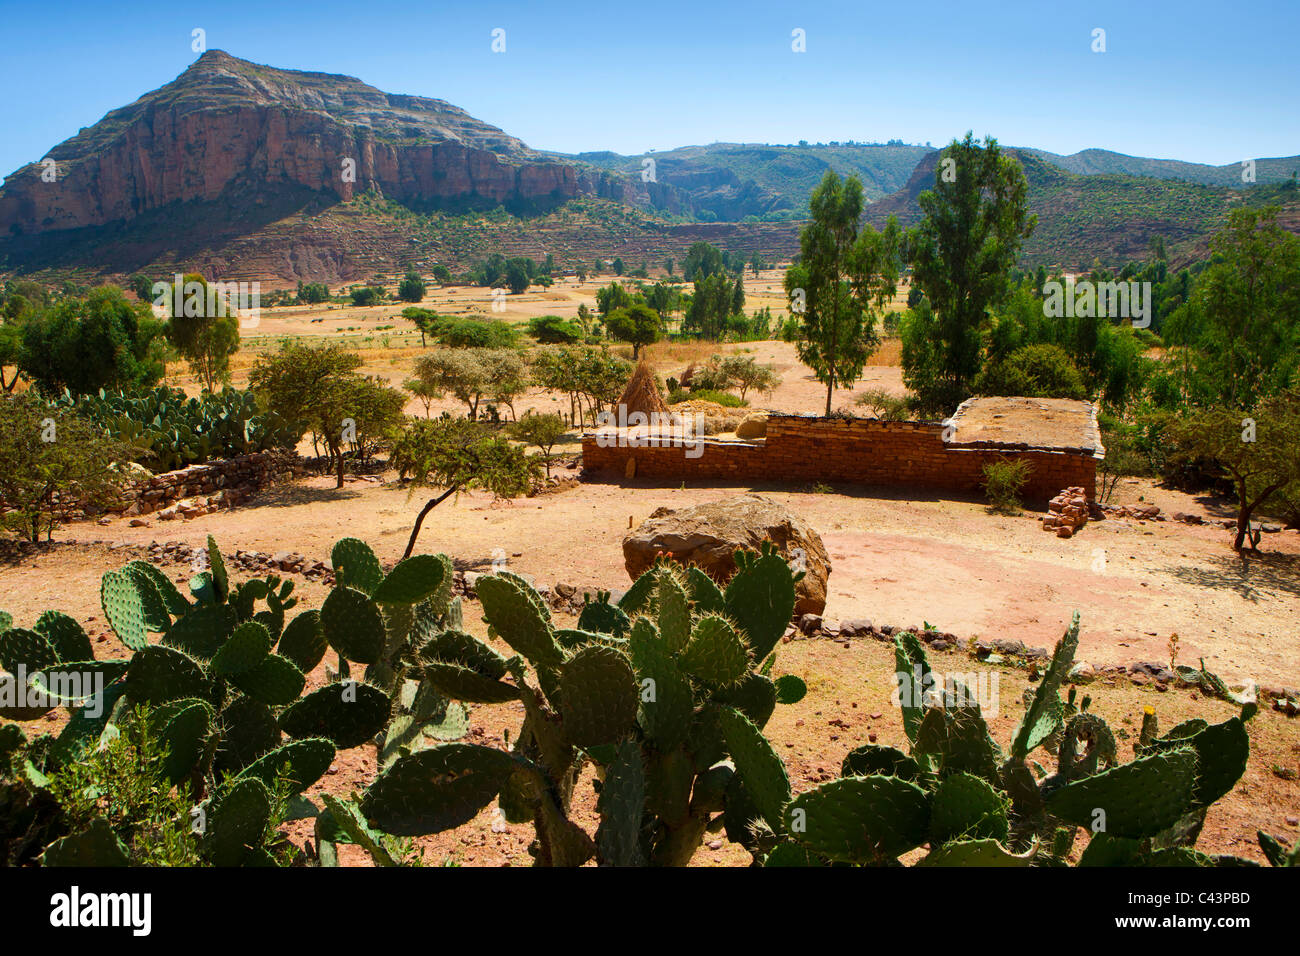 Gerealta, Africa, Ethiopia, highland, village, house, home, trees, cacti, cowardly cacti Stock Photo